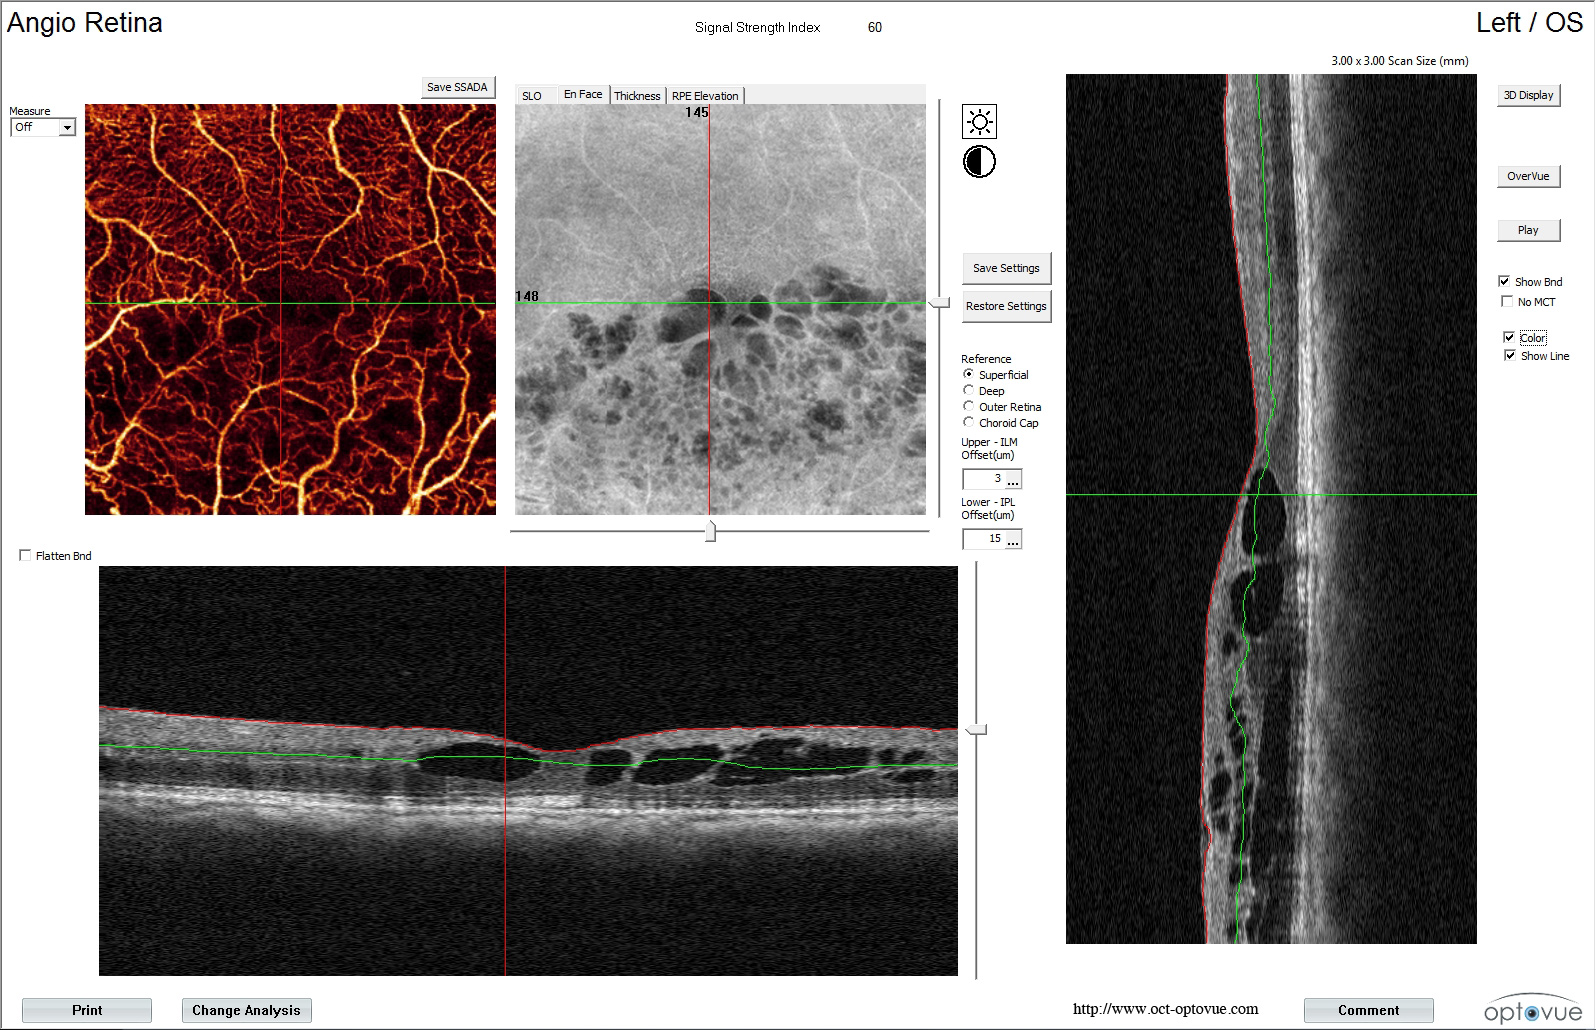 angio-oct-xr avanti maille capillaire optovue